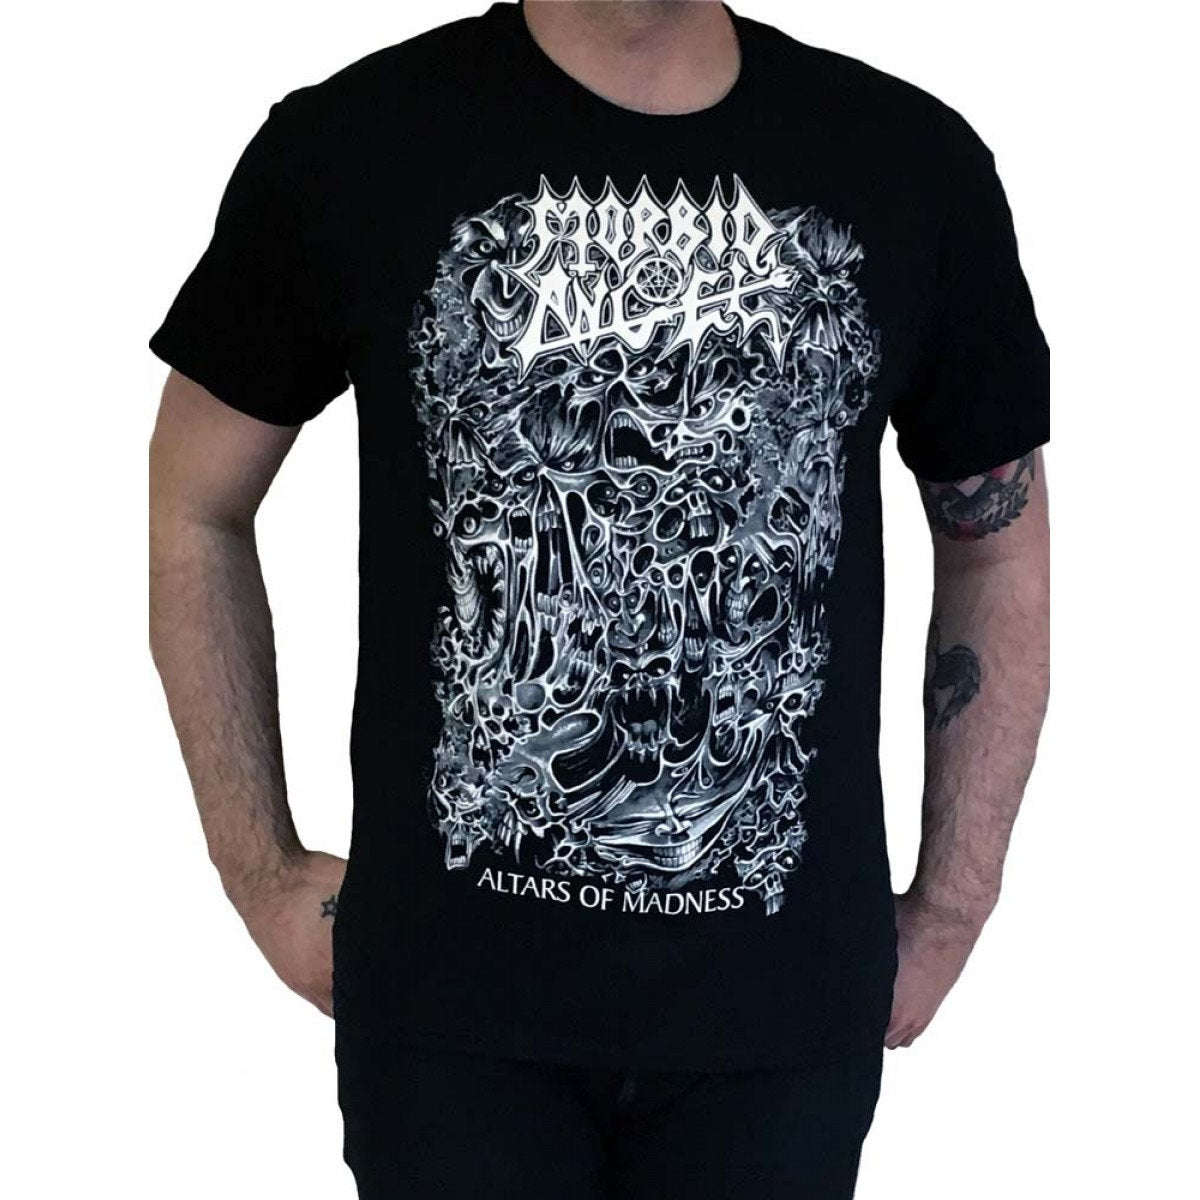 Morbid Angel "Altars Of Madness" Vintage Print T-shirt